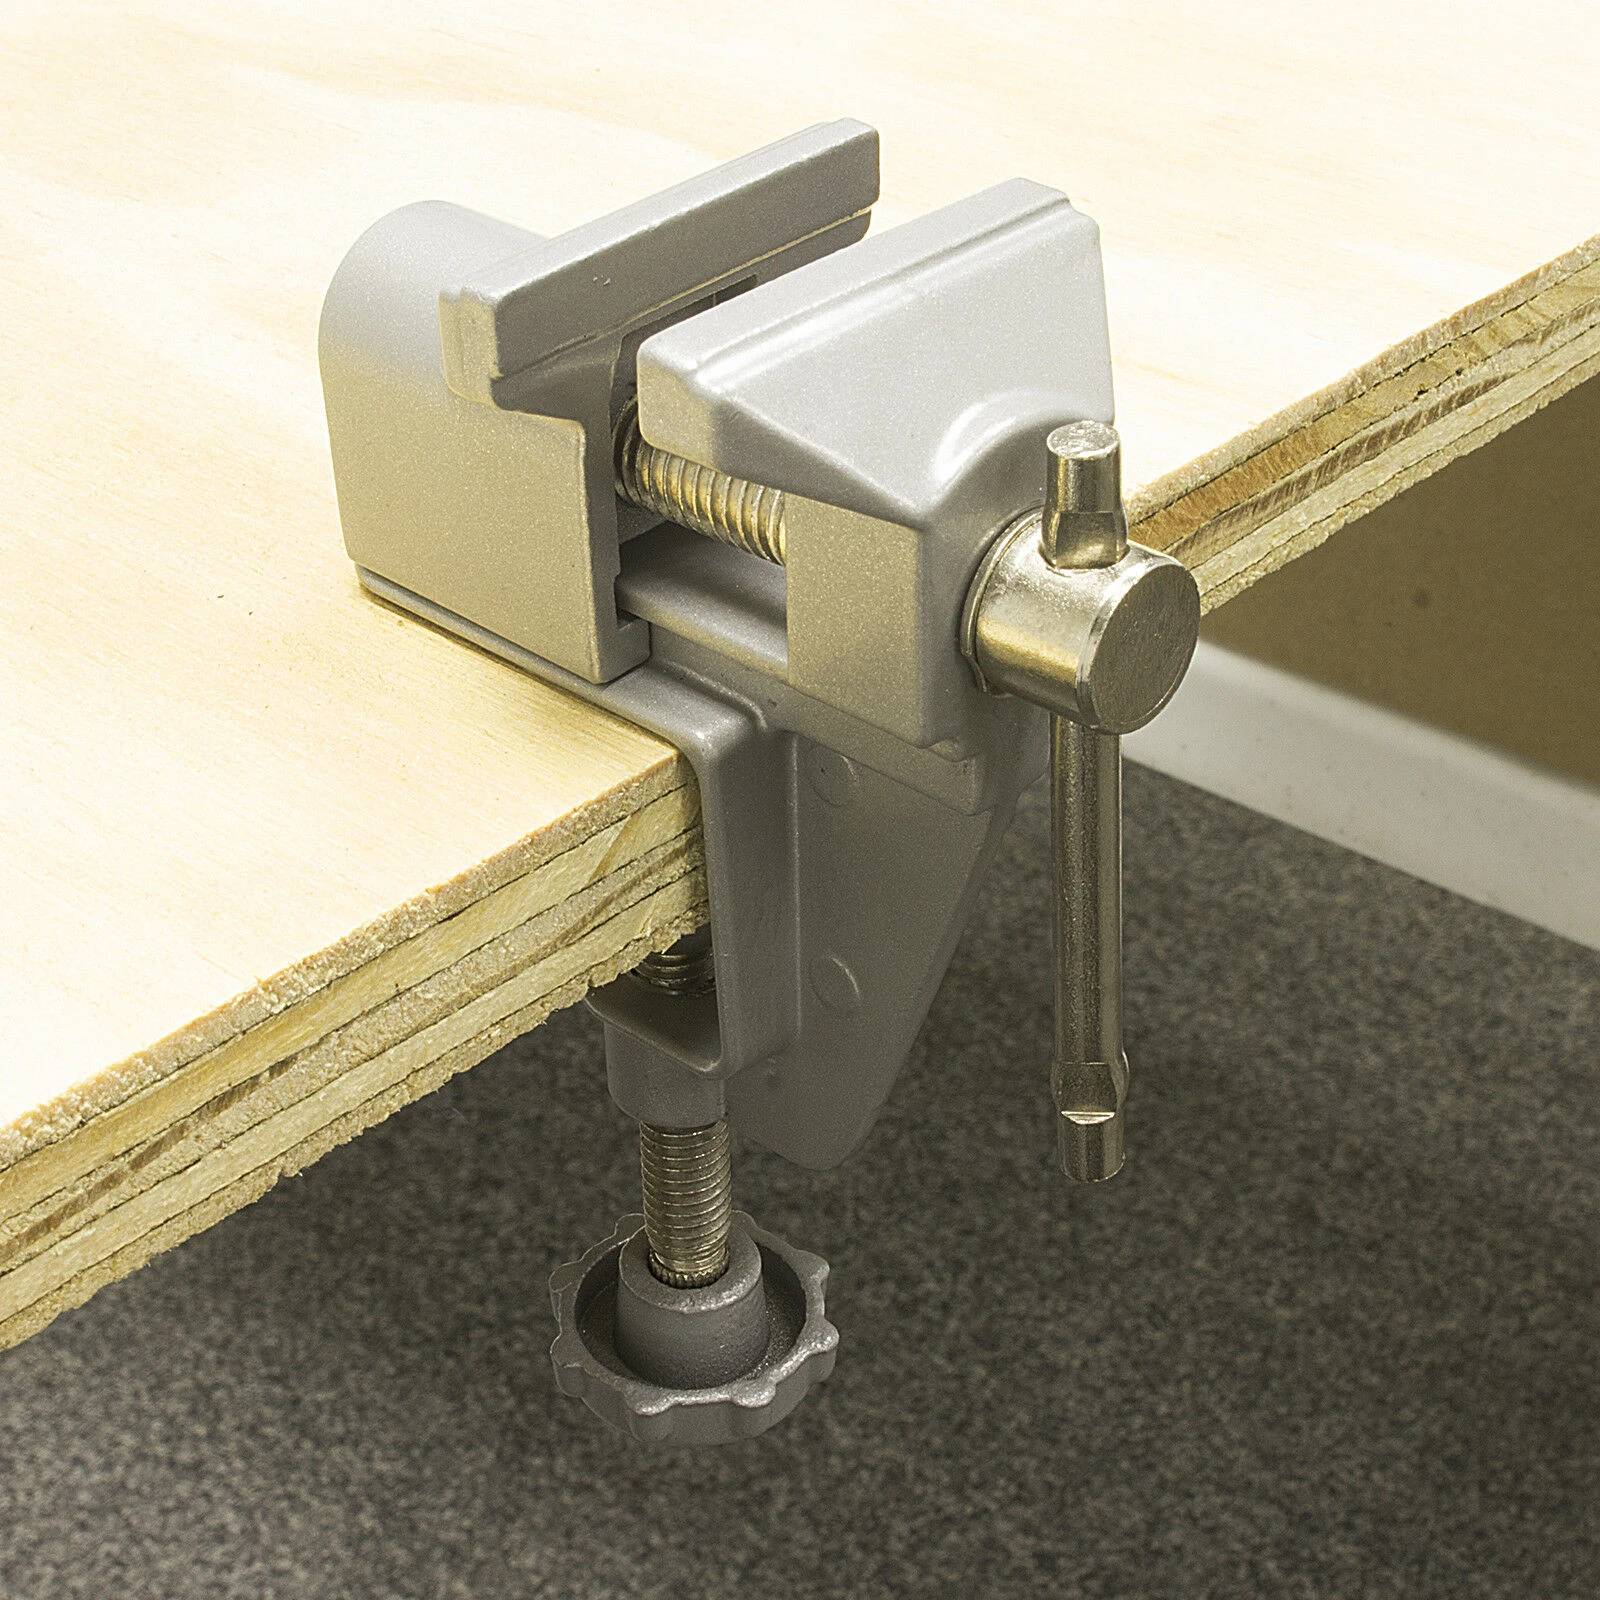 

Mini Table Bench Vise 10.6cm Work Clamp Swivel Hobby Craft Repair Tool Jewelers Aluminum Alloy DIY For Cut Bend Alter